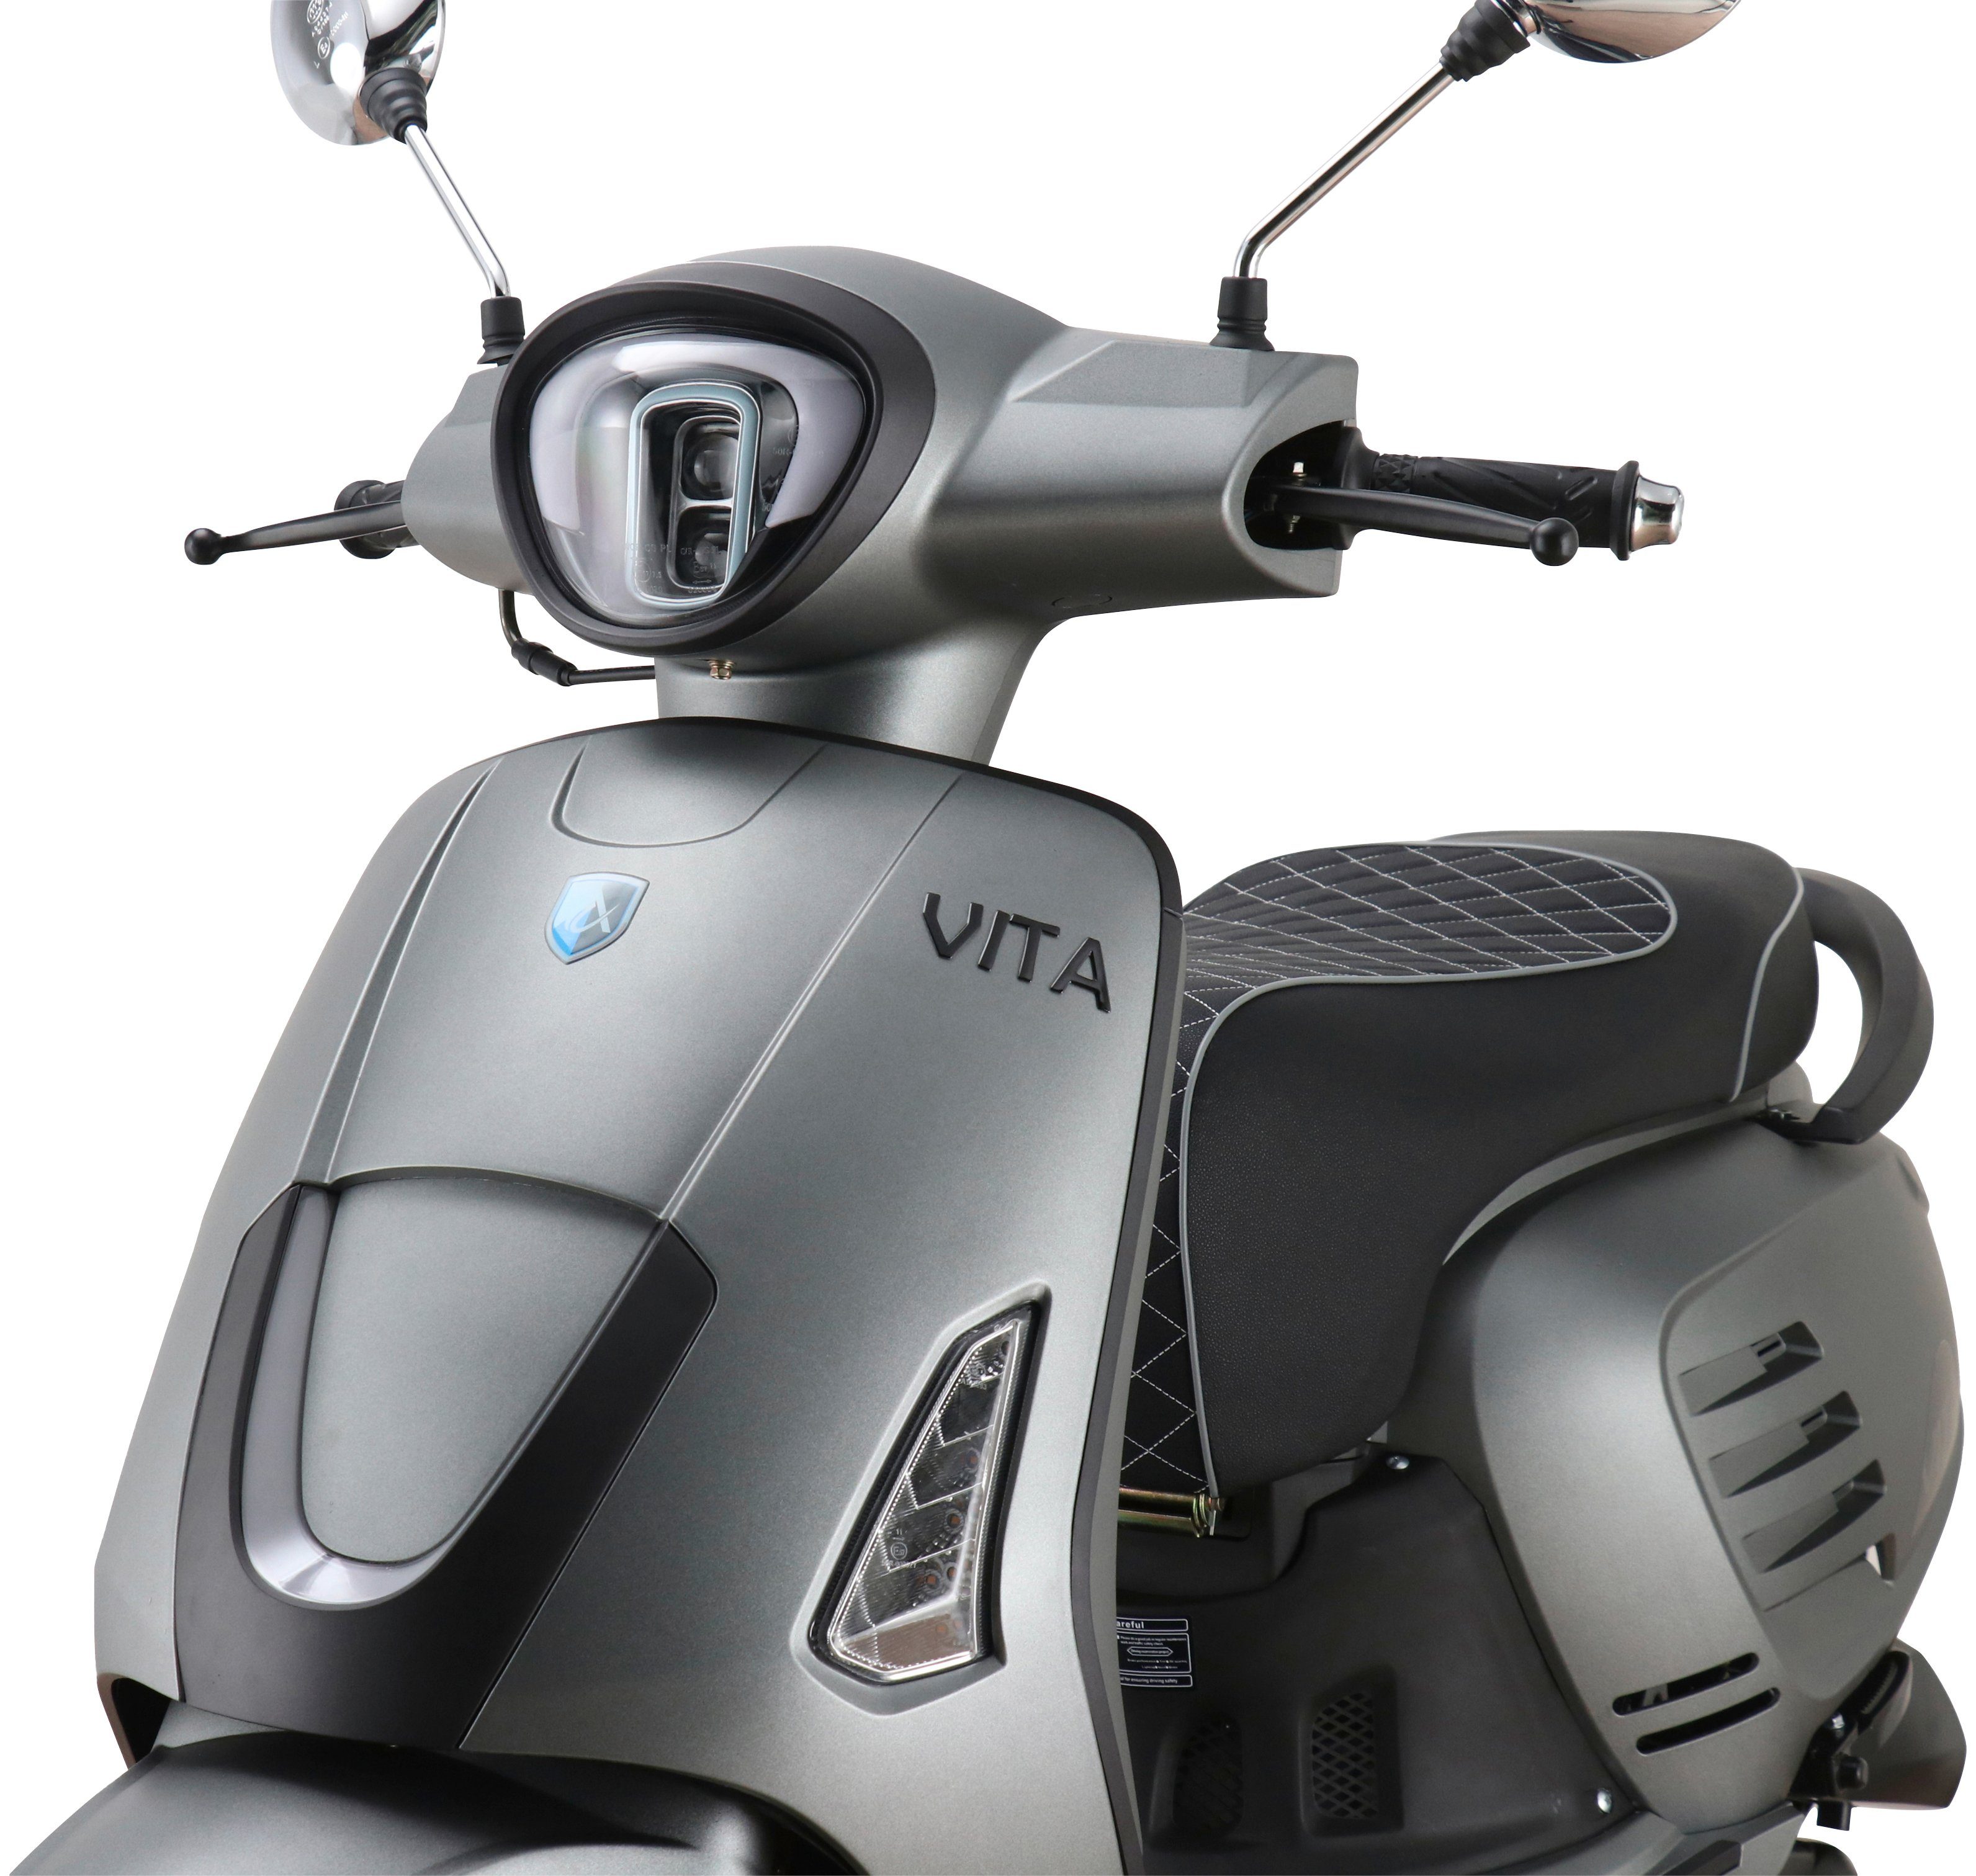 Euro Alpha 5 km/h, 125 ccm, 85 Motorroller Vita, Motors